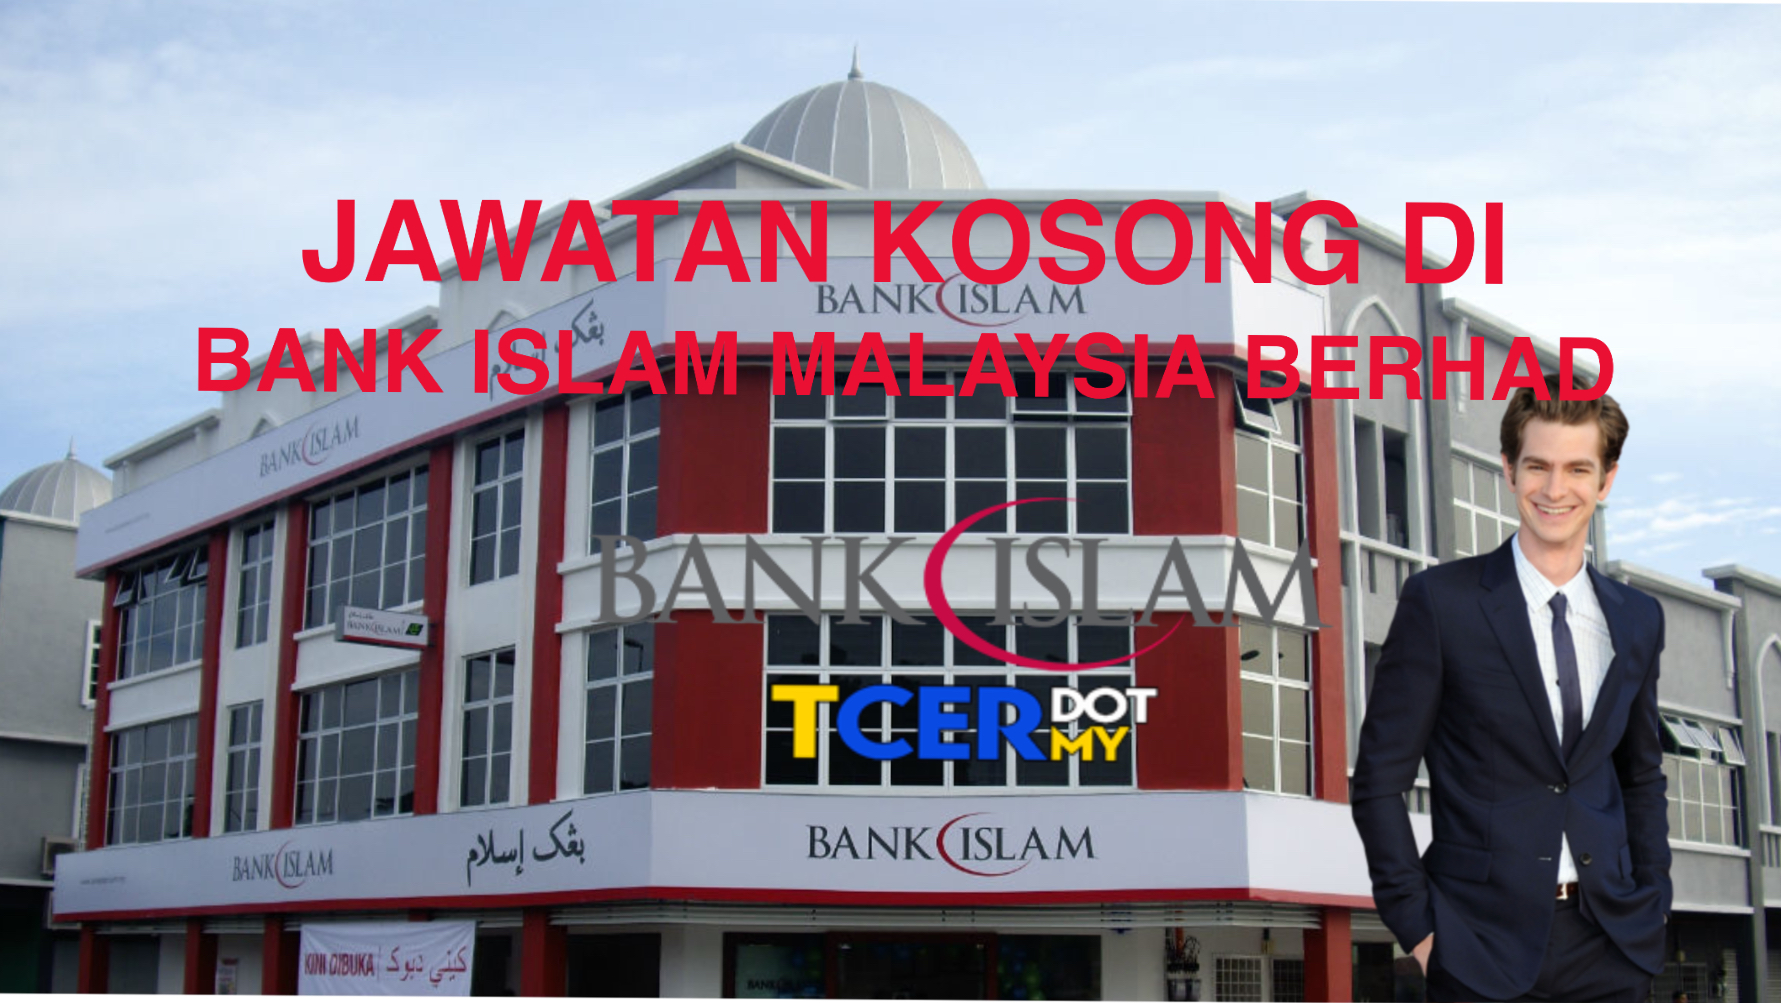 Jawatan Kosong Di Bank Islam Malaysia Berhad - TCER.MY